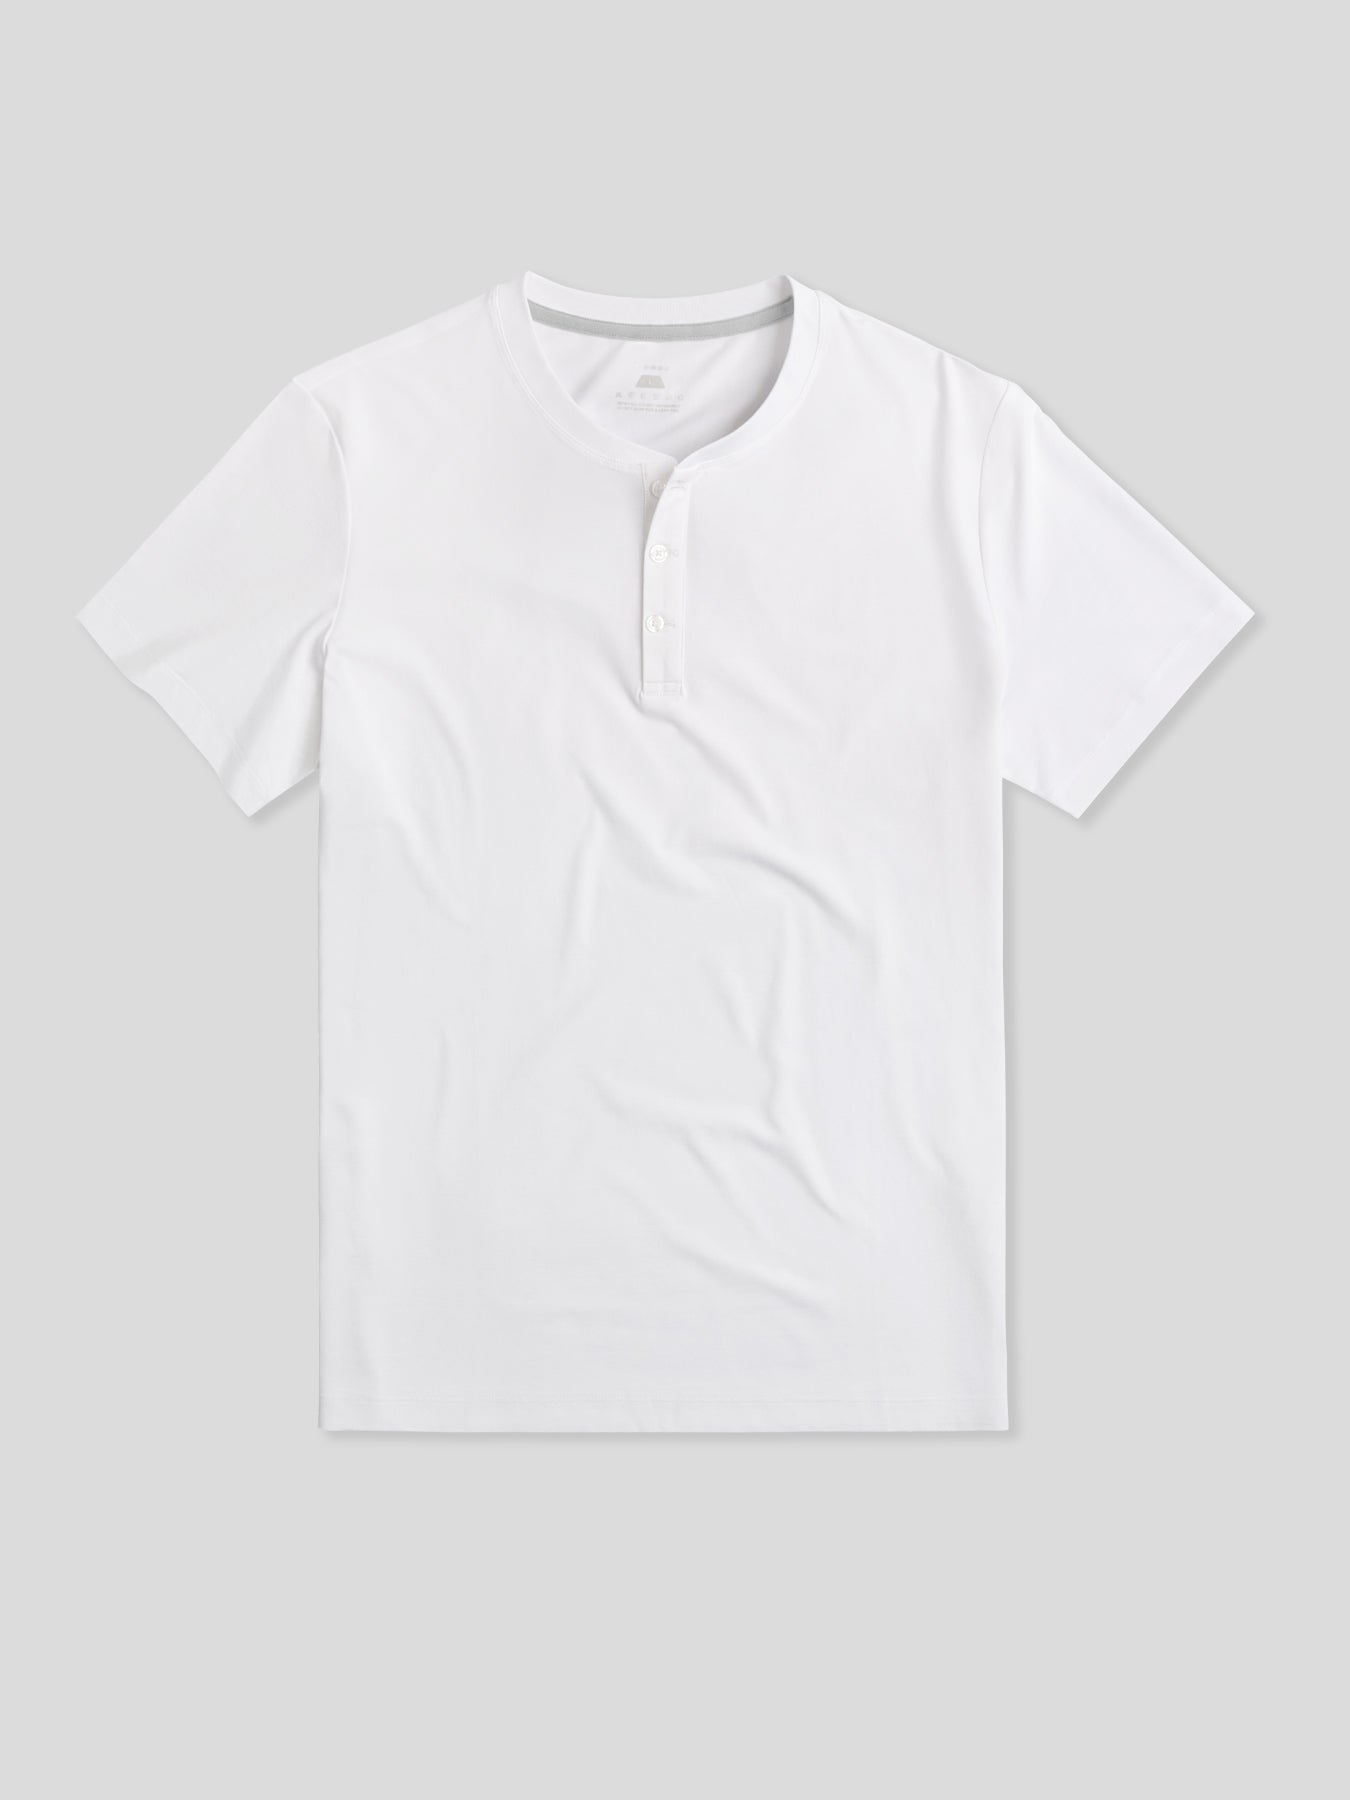 StayCool 2.0 Slim Fit Henley Shirt